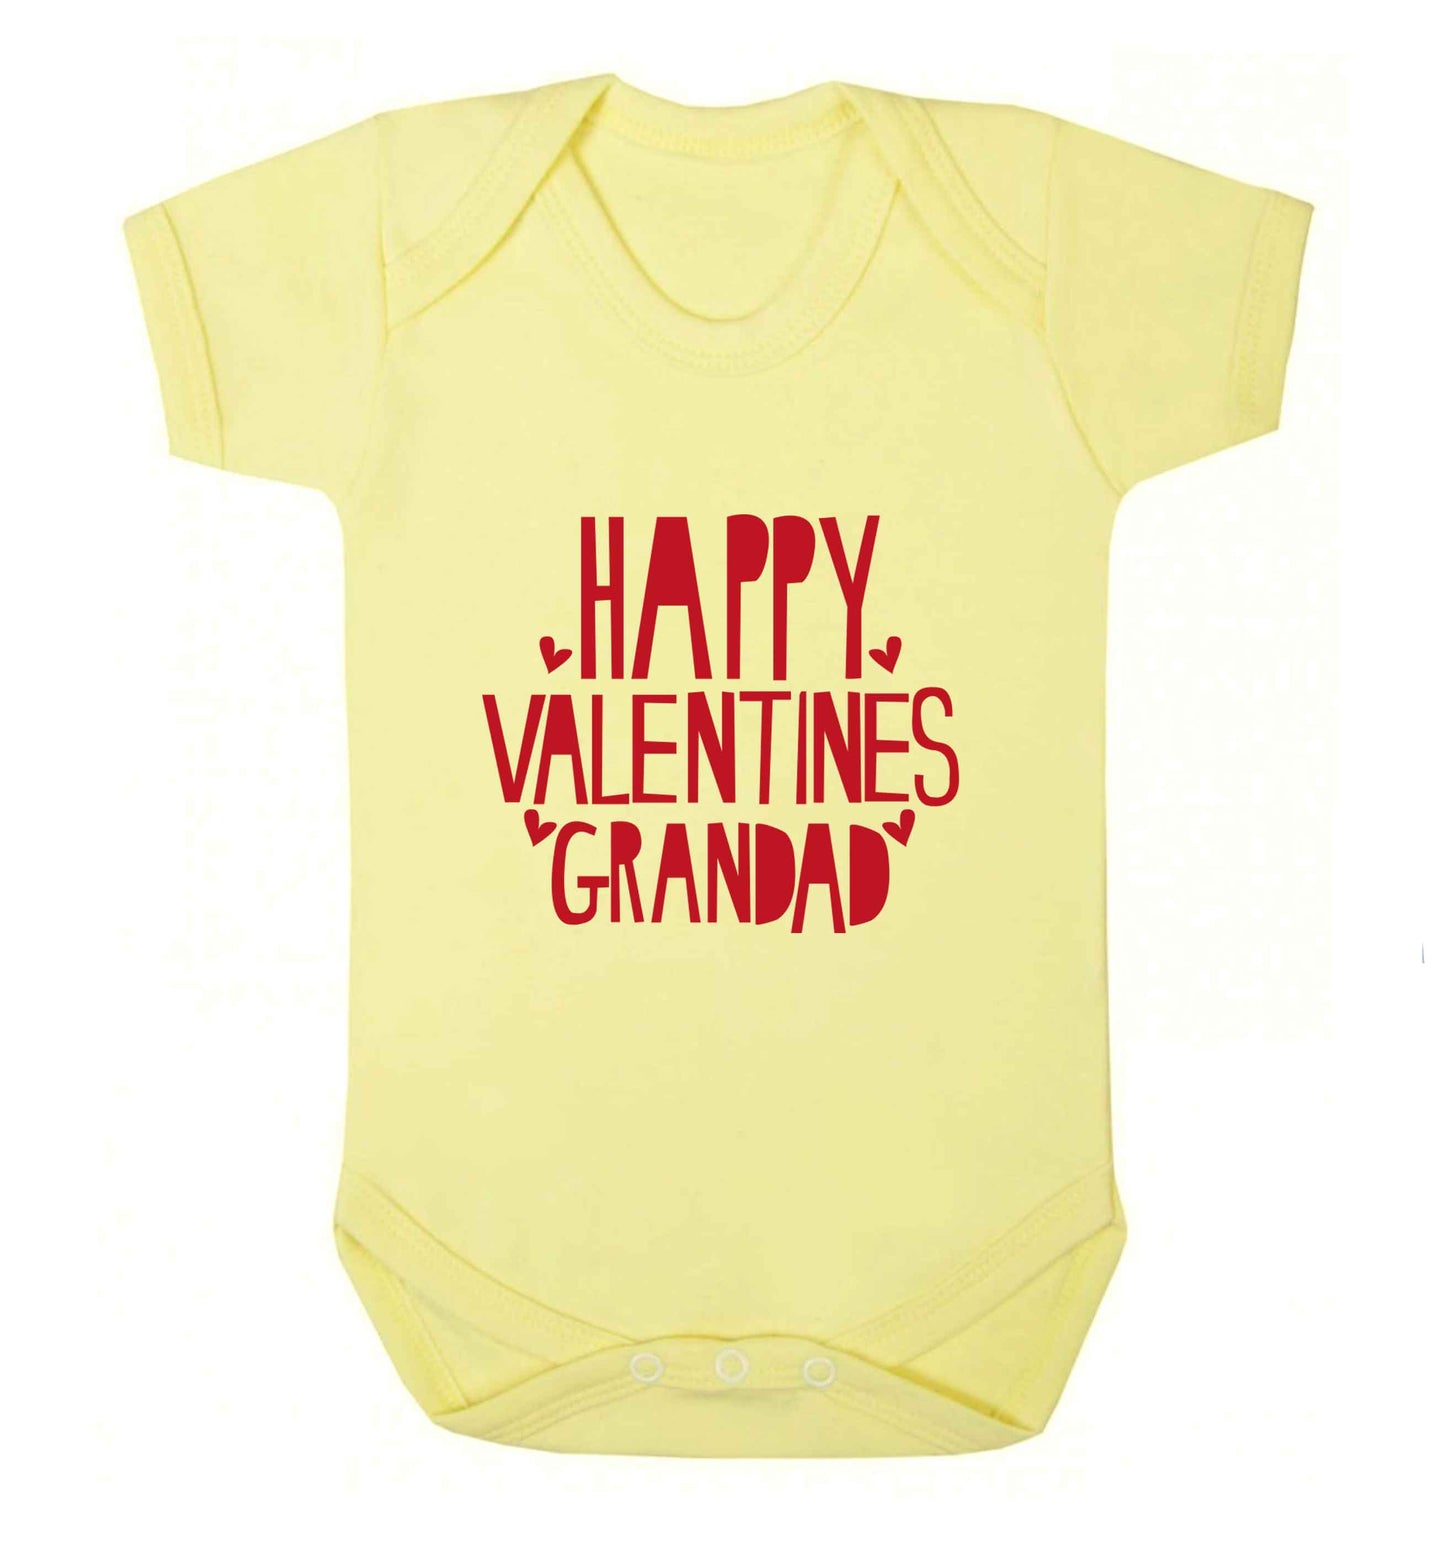 Happy valentines grandad baby vest pale yellow 18-24 months